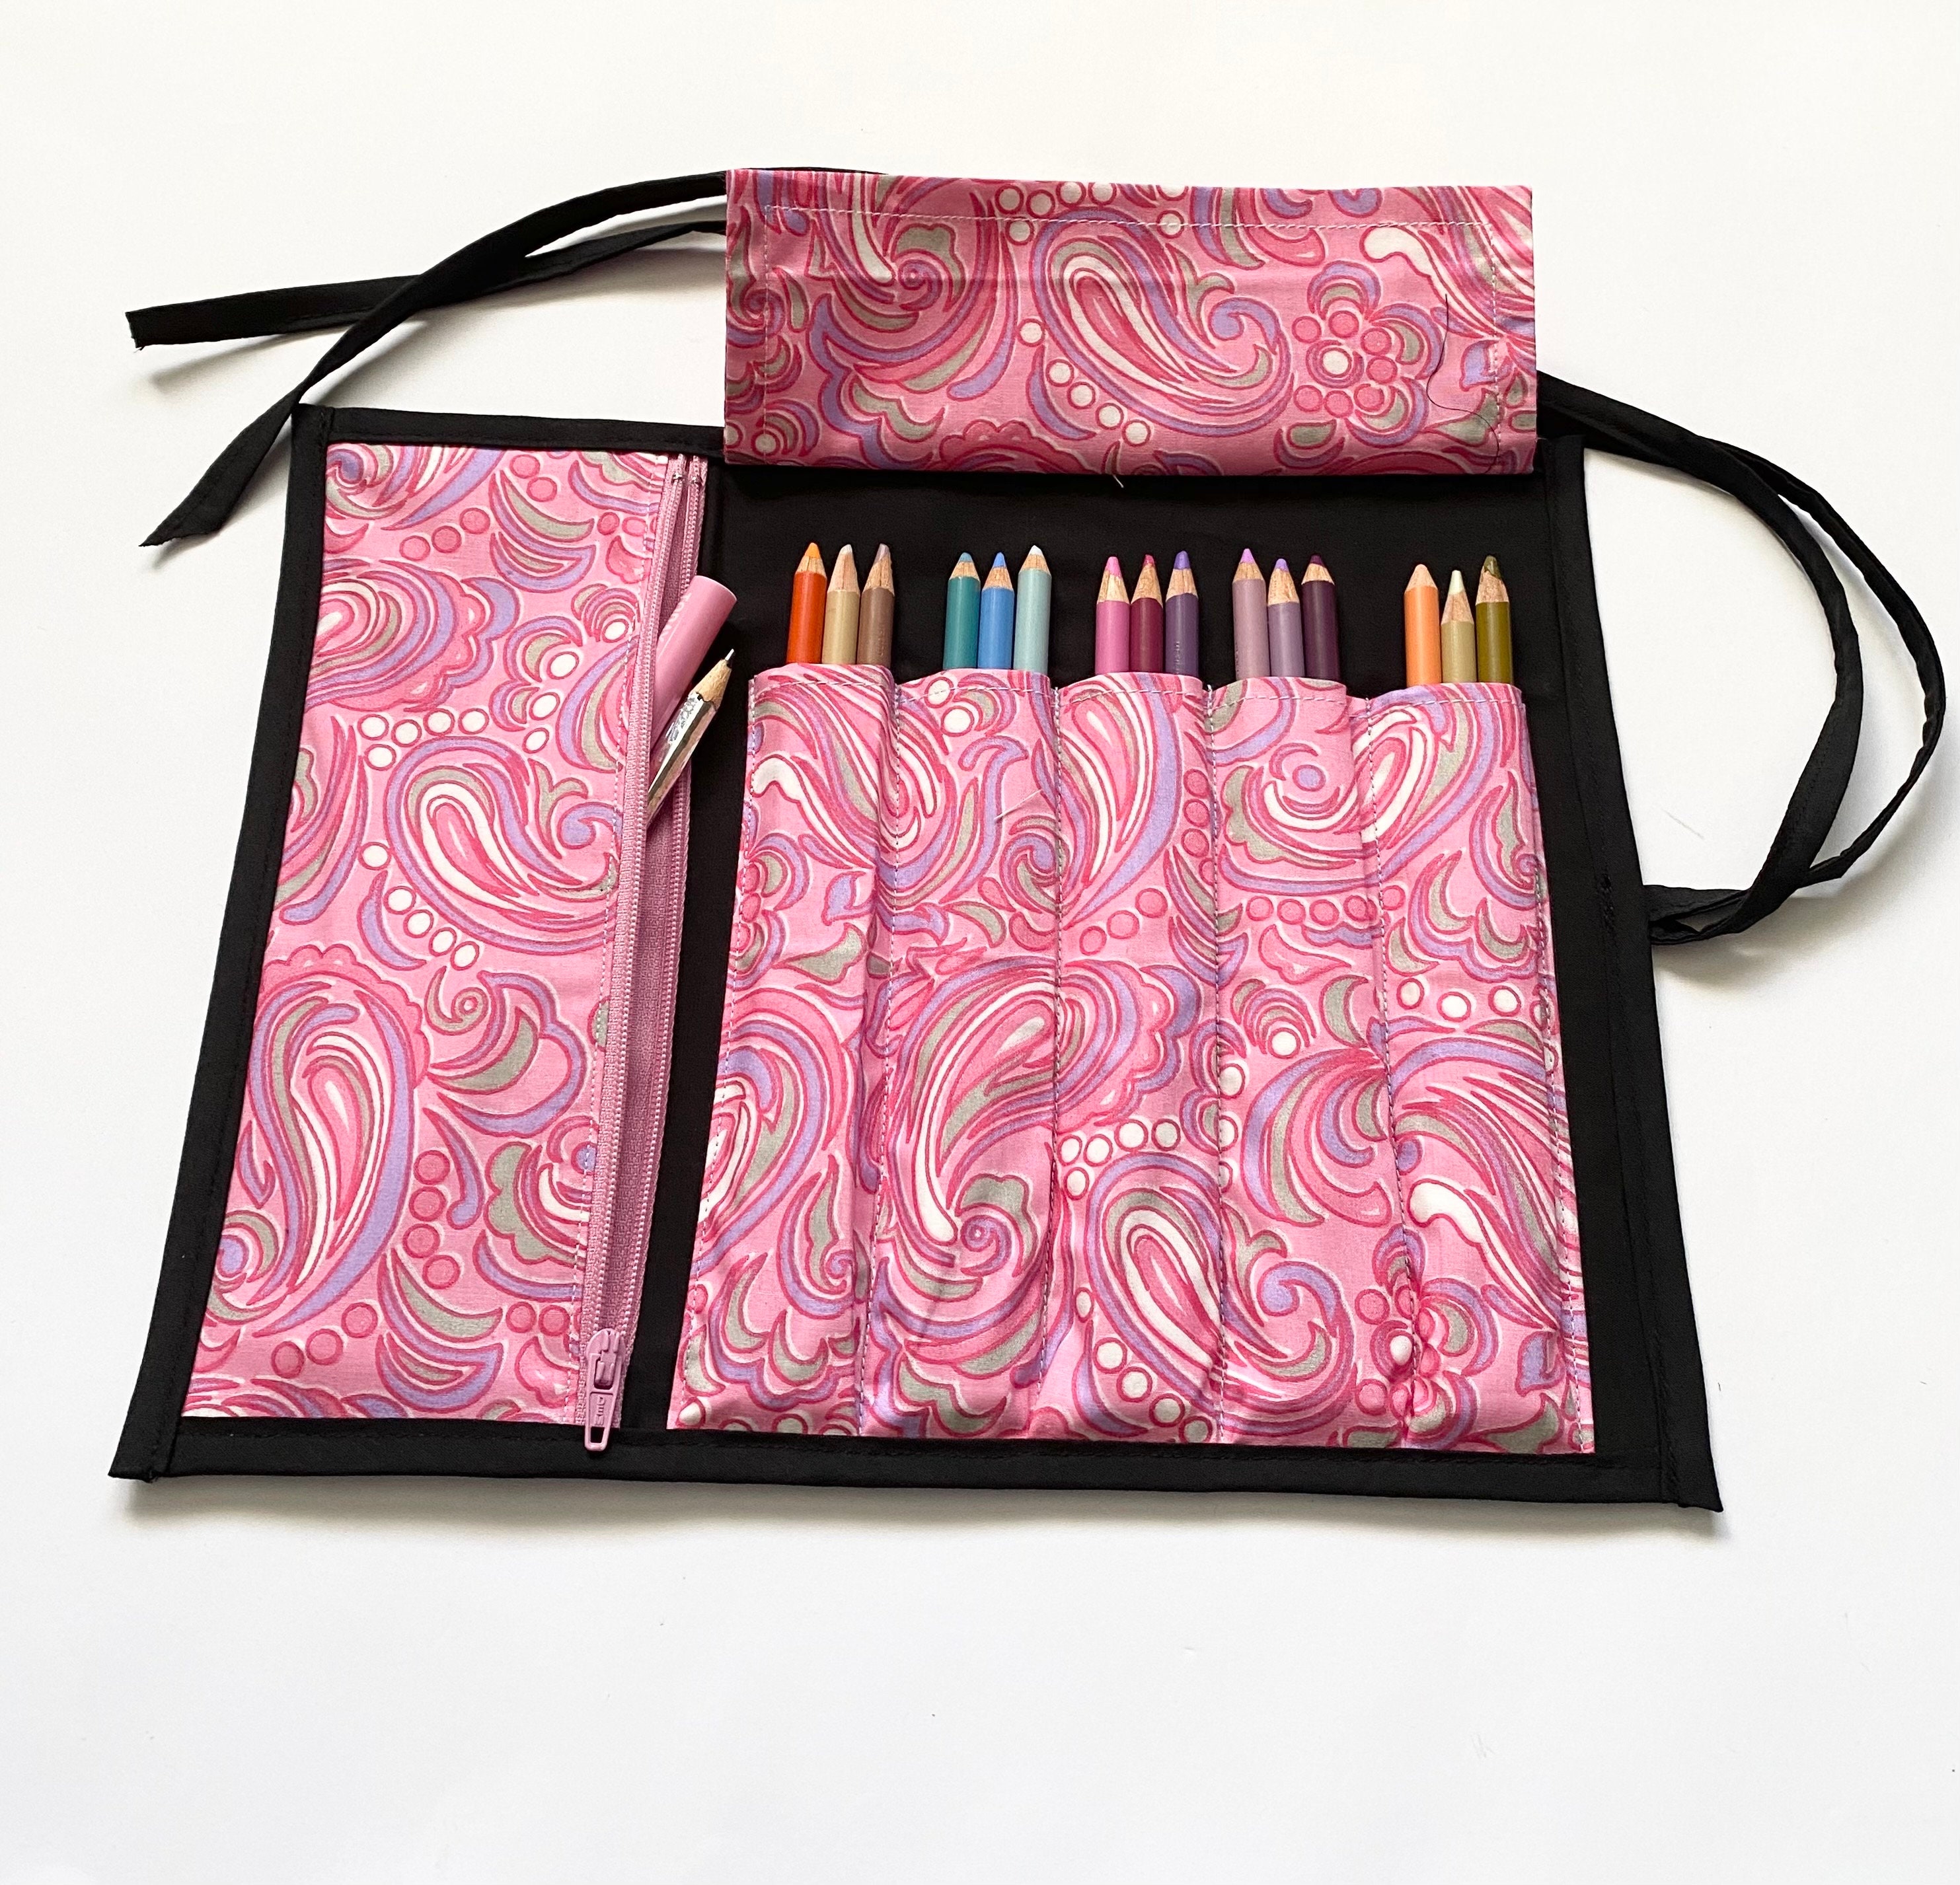 Angoo Classic Pocket Pencil Case Canvas School Supplies Storage